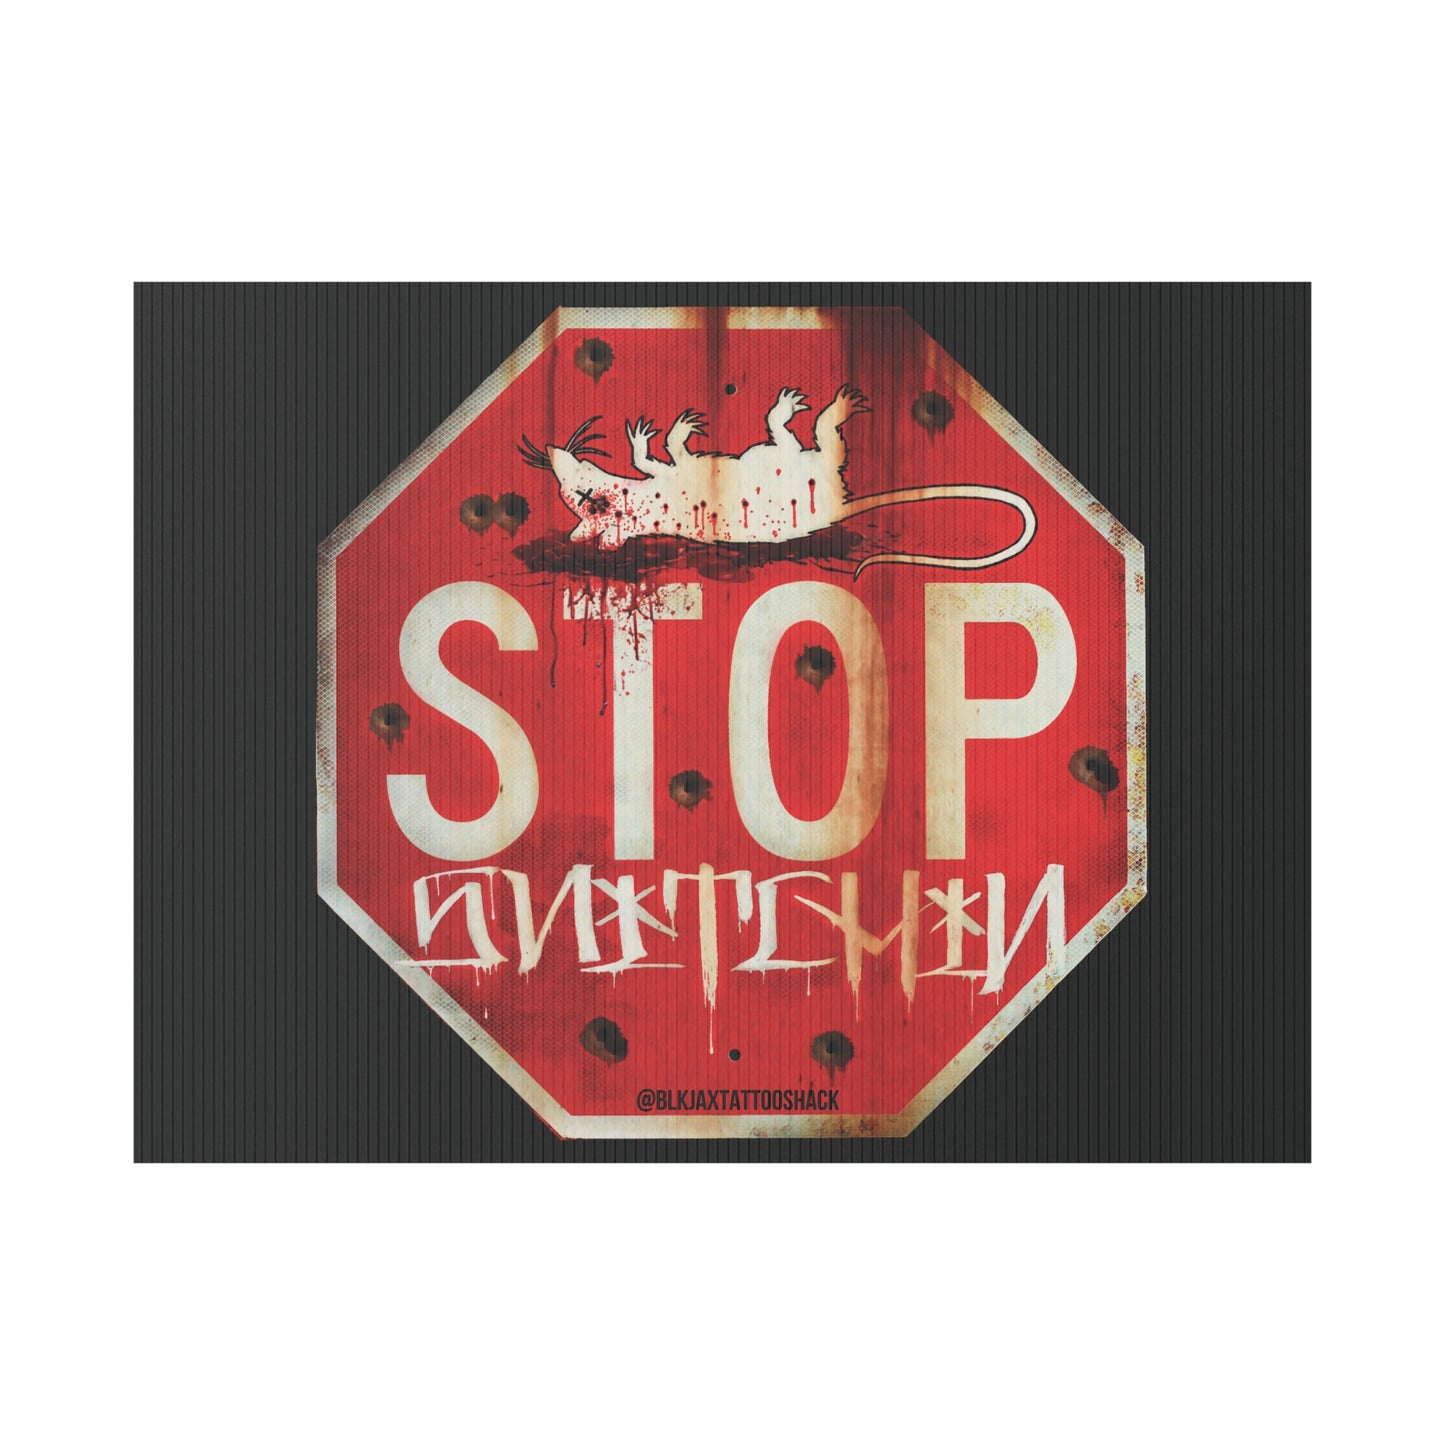 OG Stop Snitchin Plastic Yard Sign